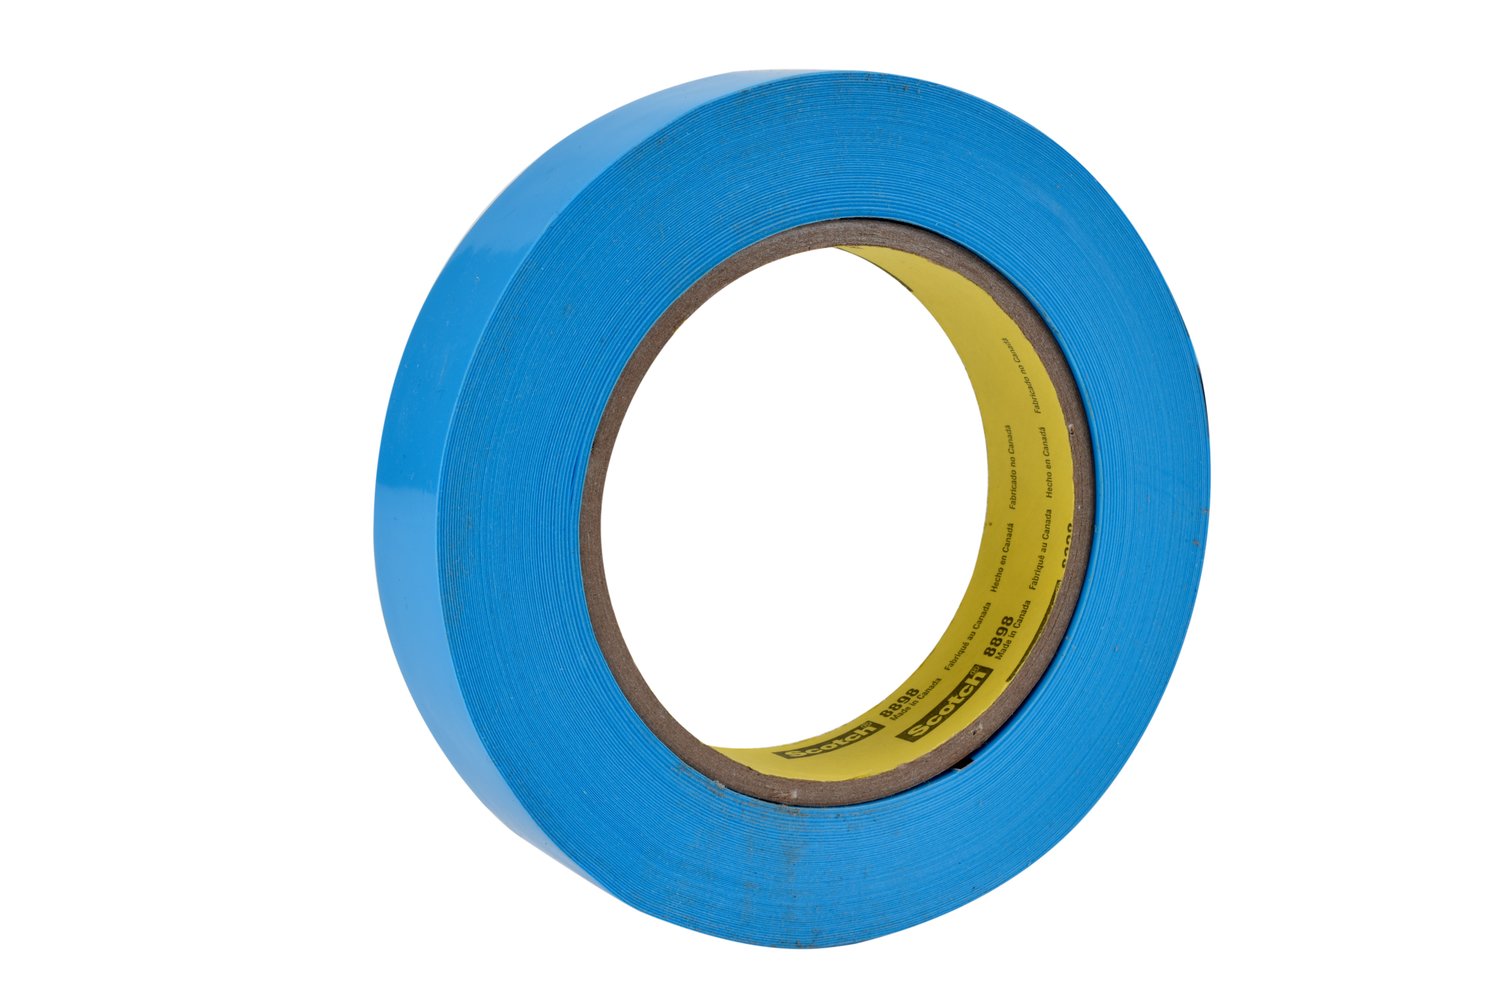 7000028946 - Scotch Strapping Tape 8898, Blue, 18 mm x 55 m, 4.6 mil, 48 rolls per
case